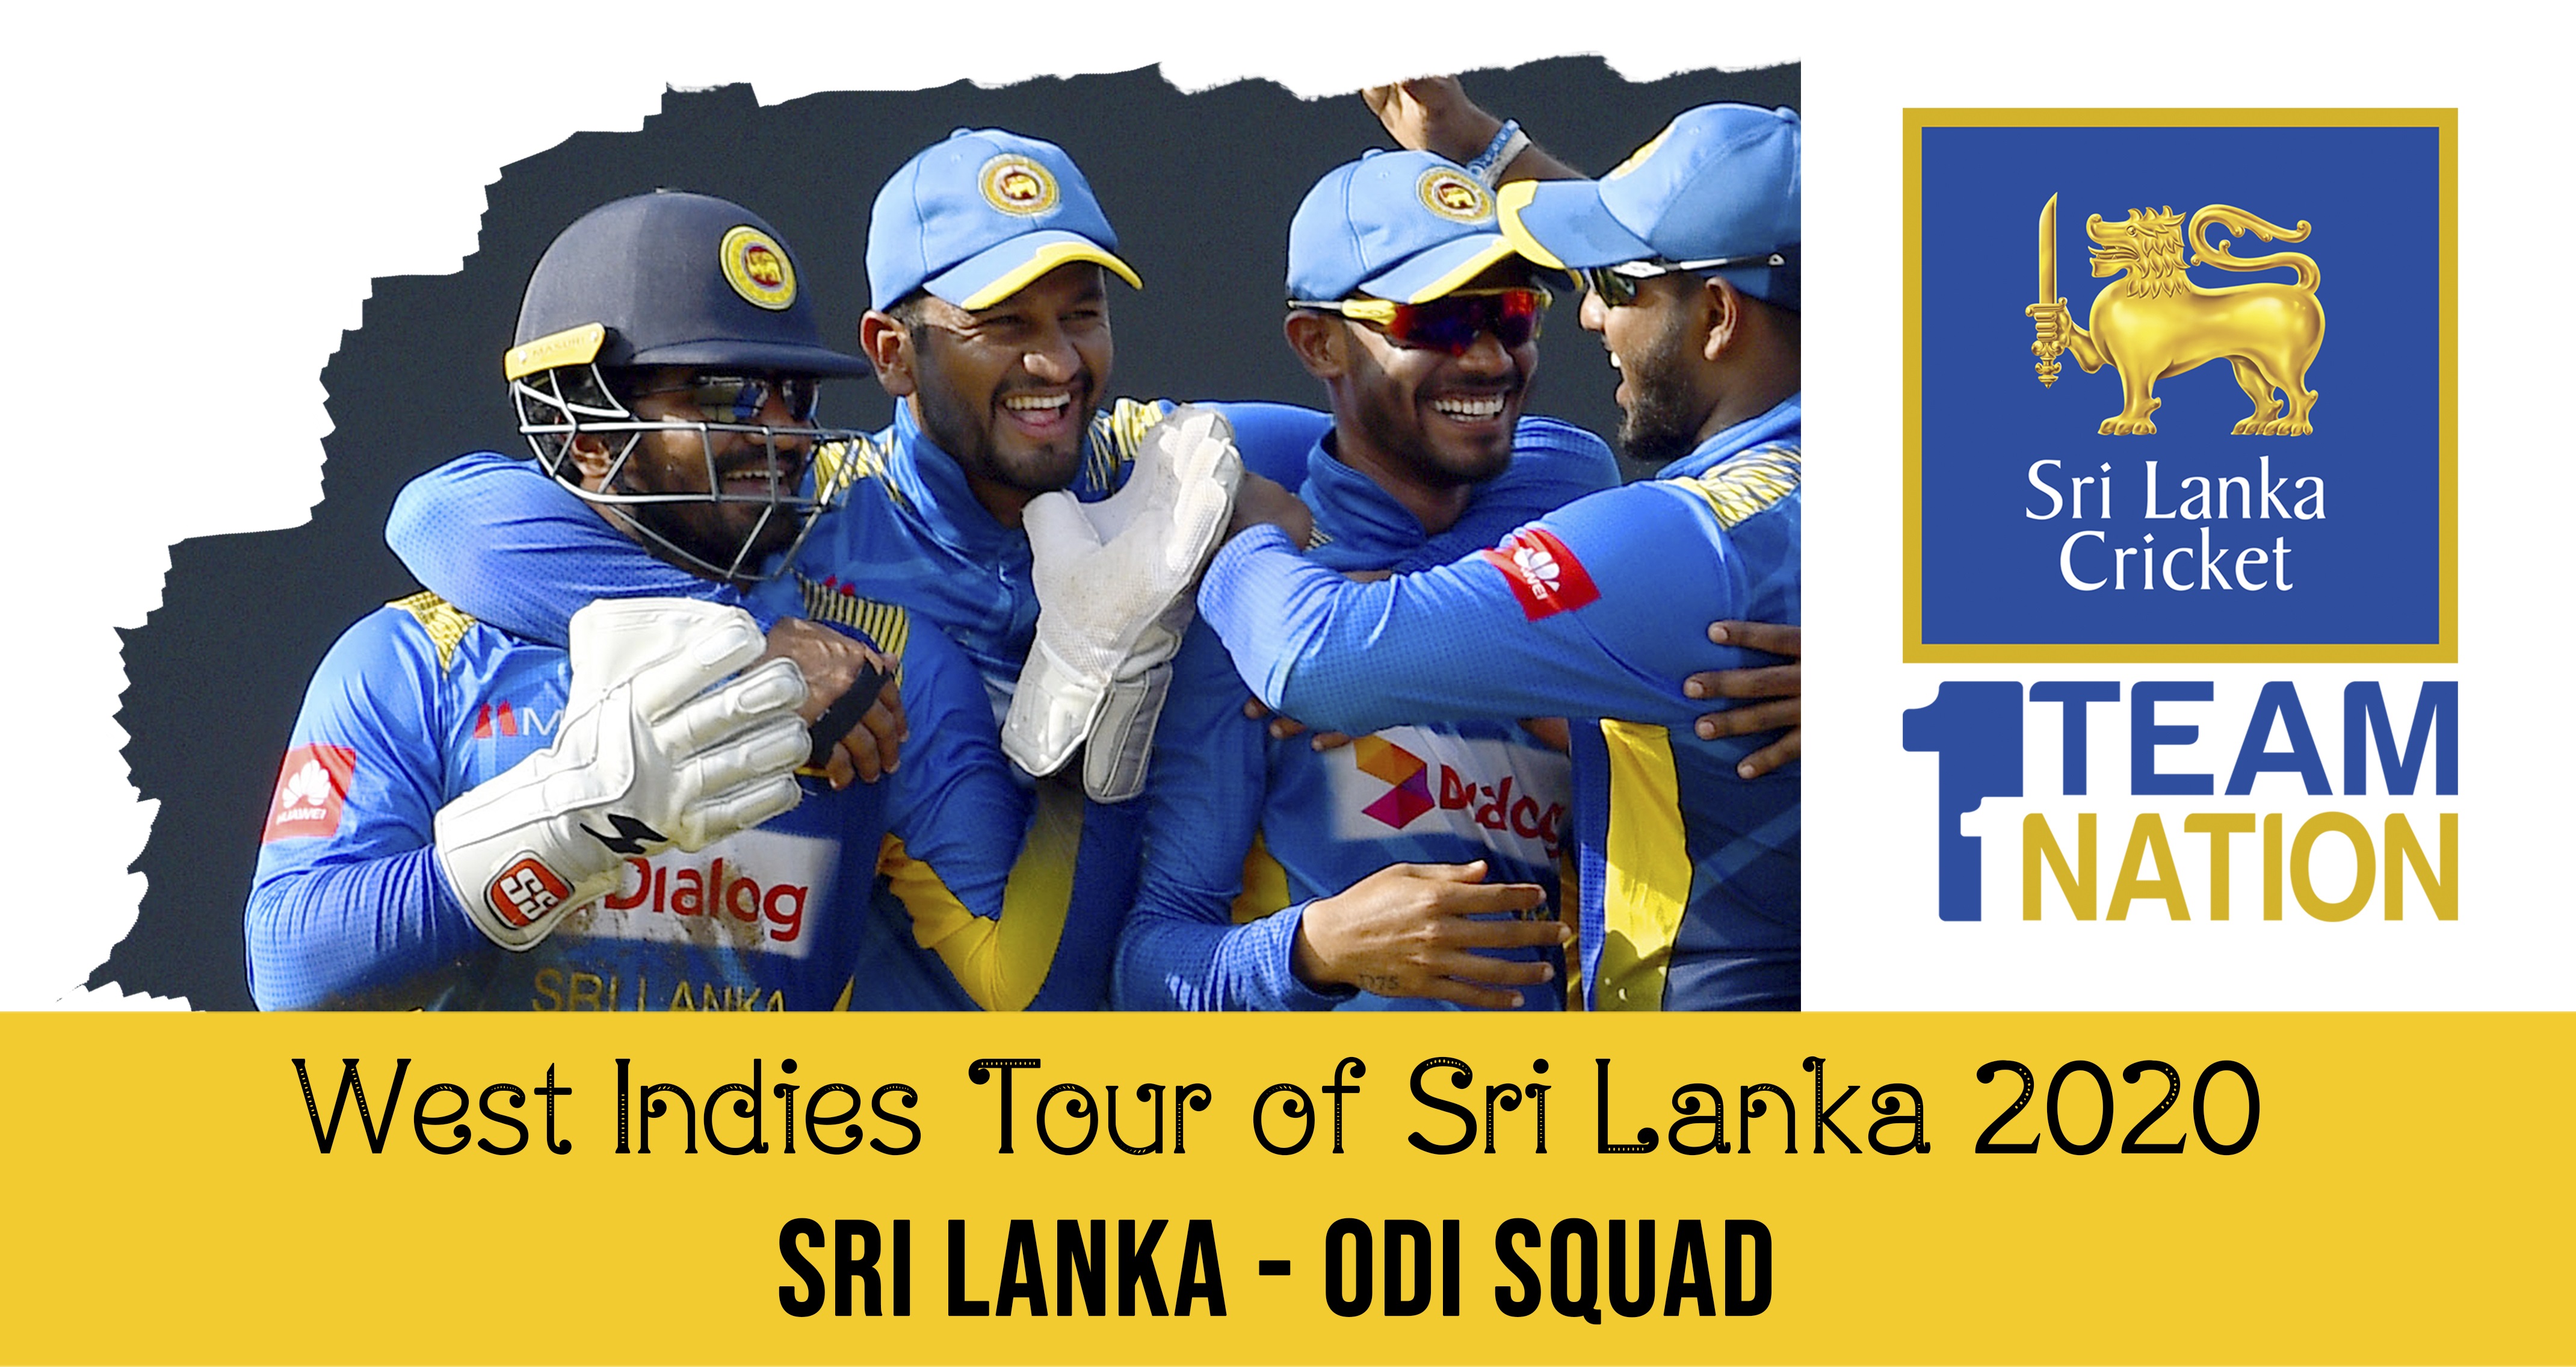 Sri Lanka ODI squad for West Indies series